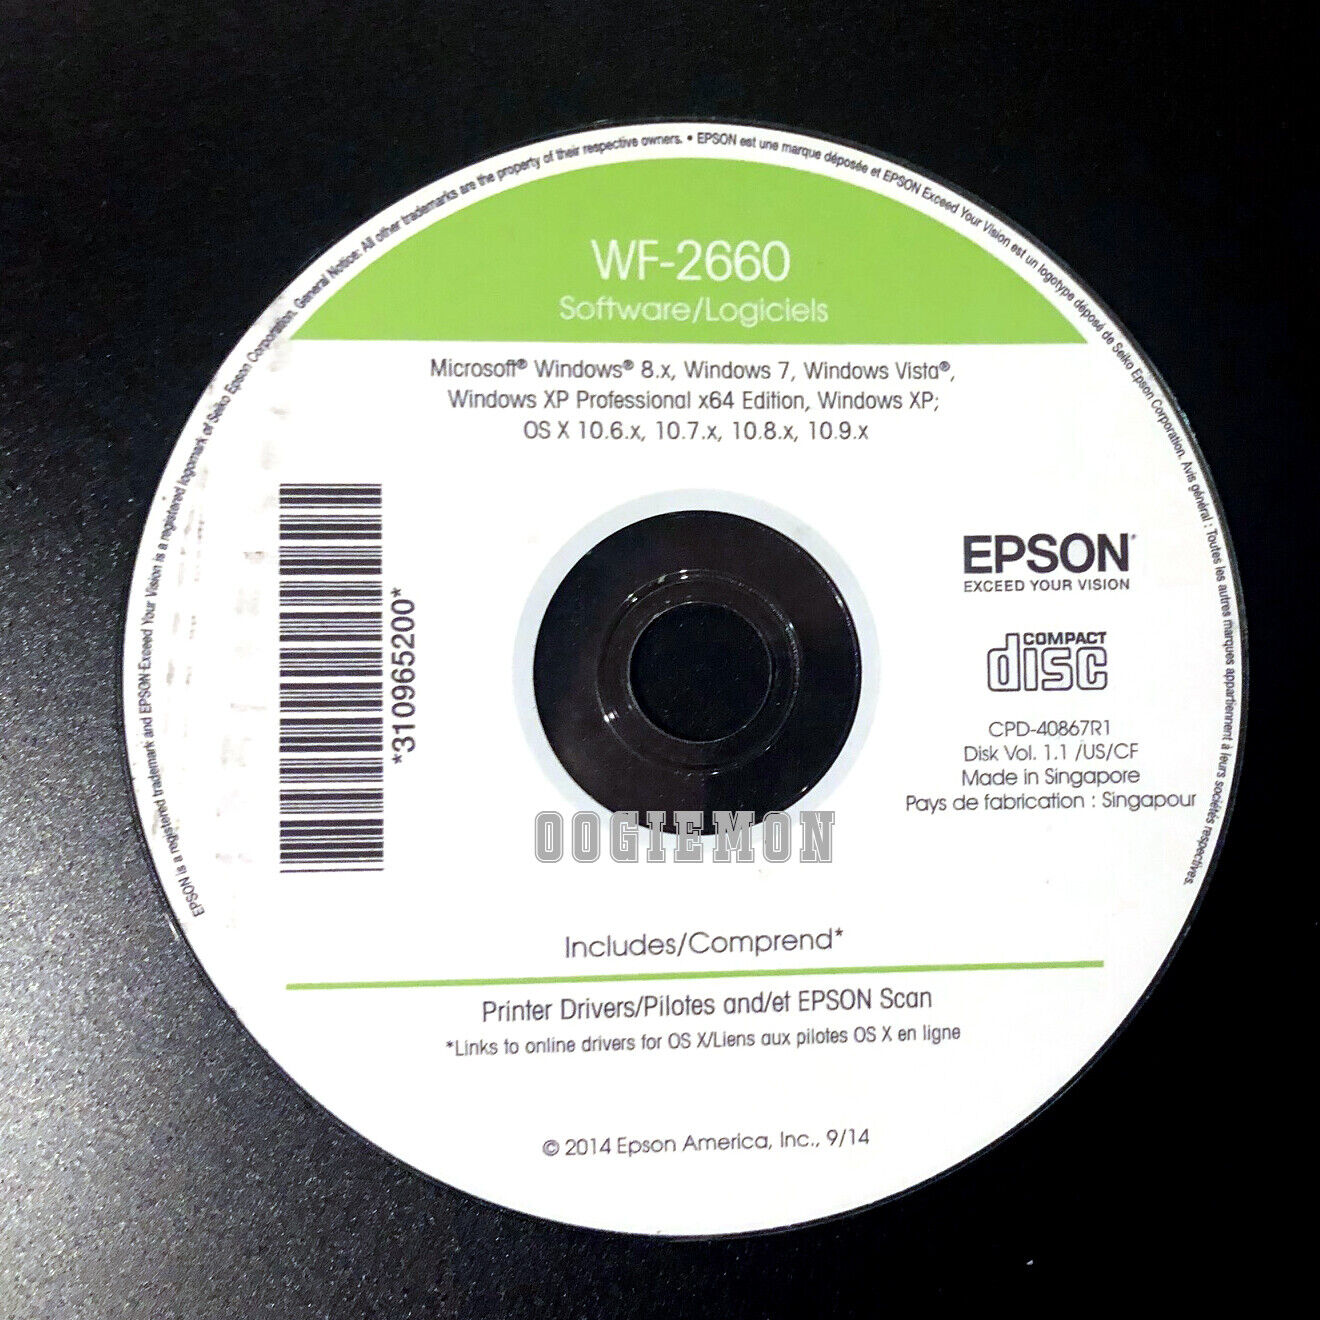 Setup Cd Rom For Epson Workforce Wf-2660 Printer Software For Windows And Macos